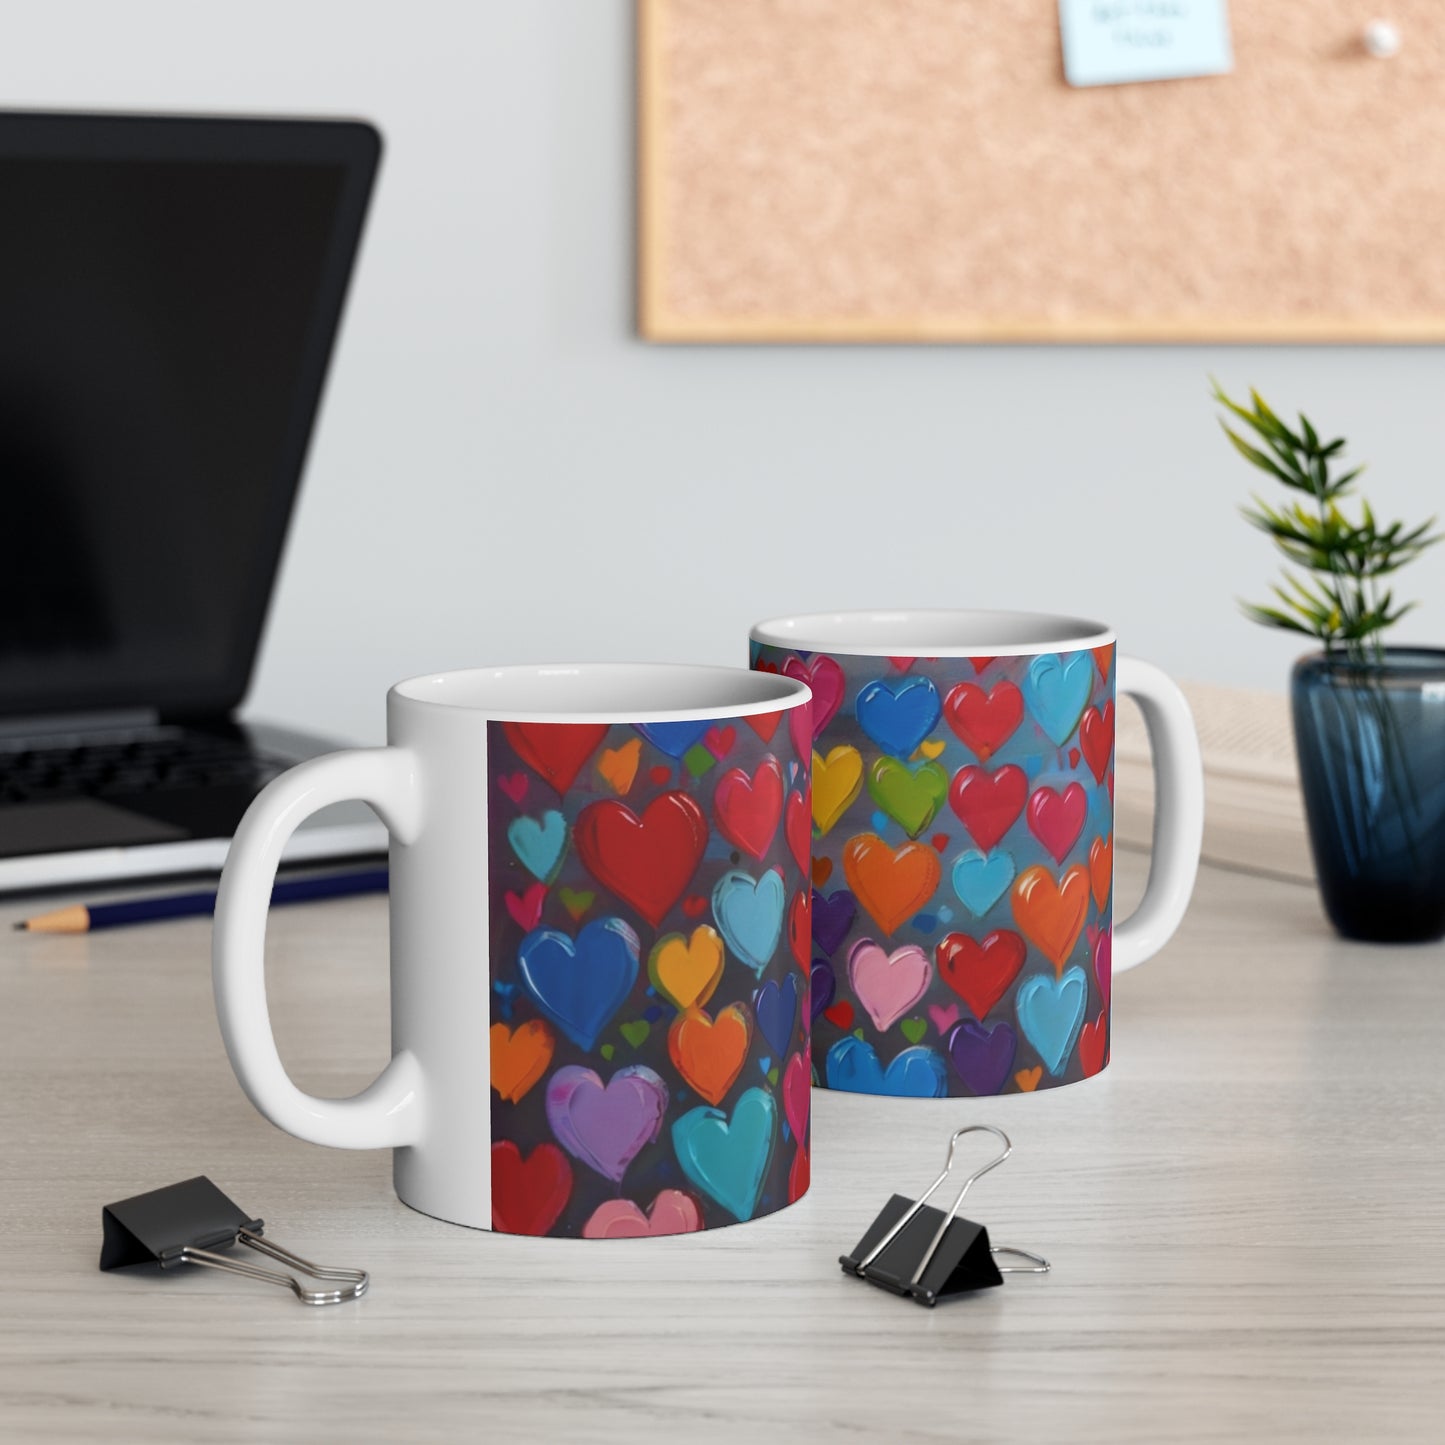 Colourful Painted Love Hearts Mug - Ceramic Coffee Mug 11oz